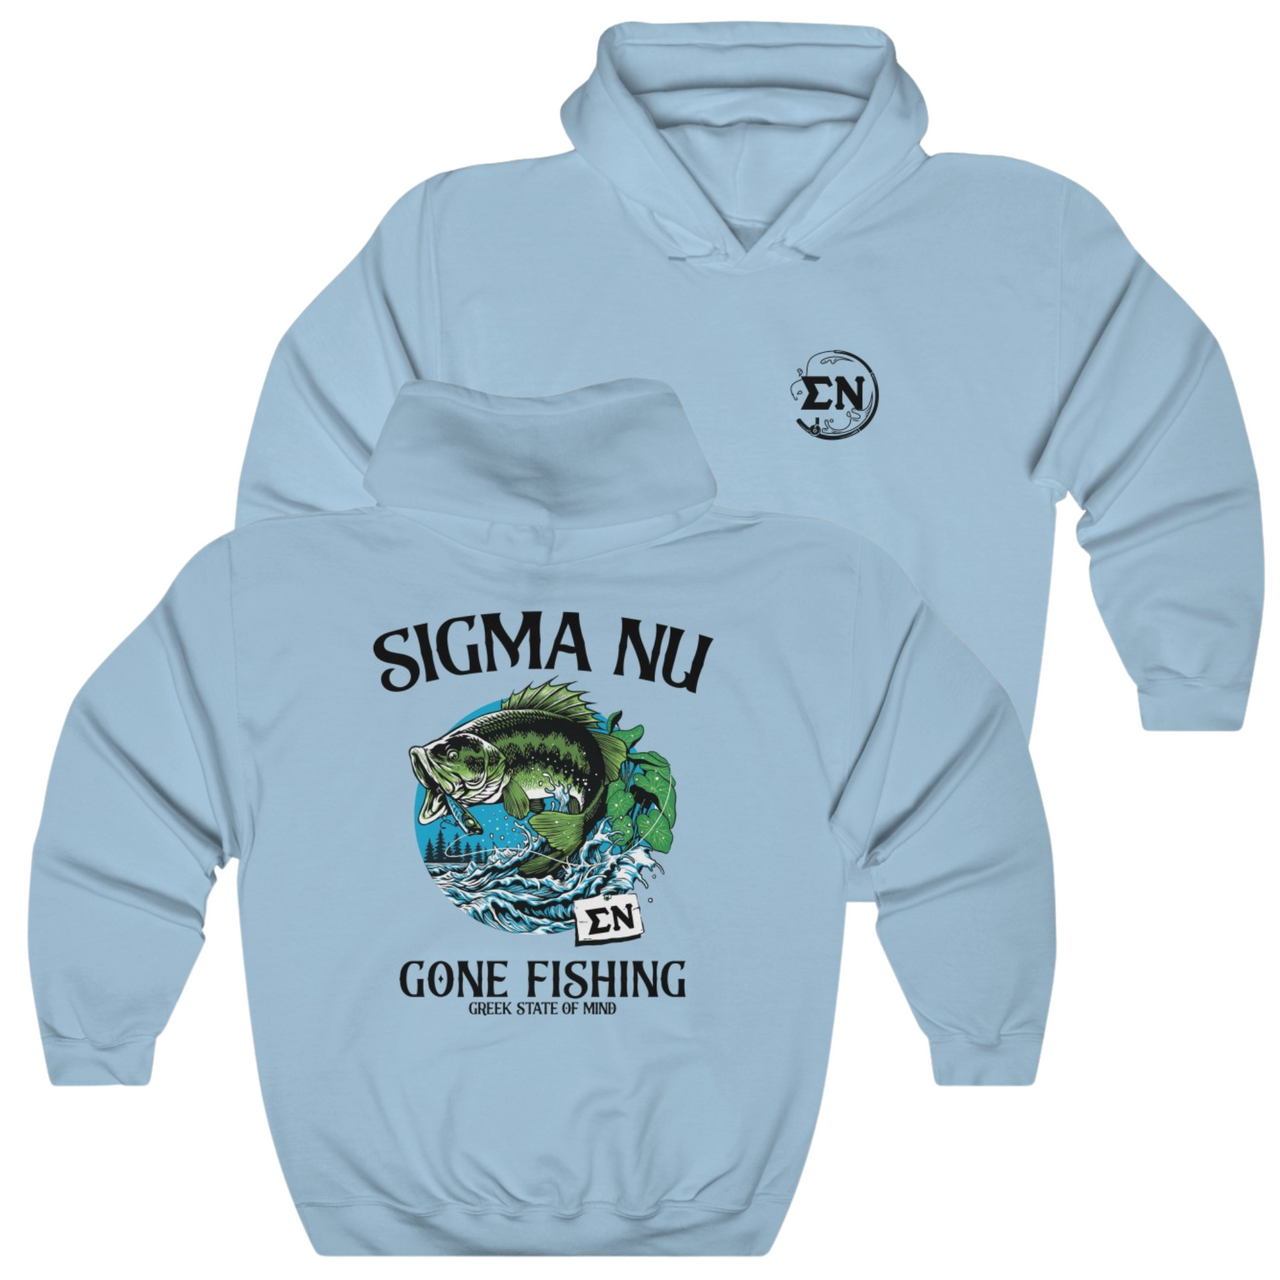 Sigma Nu Graphic T-shirt Gone Fishing 